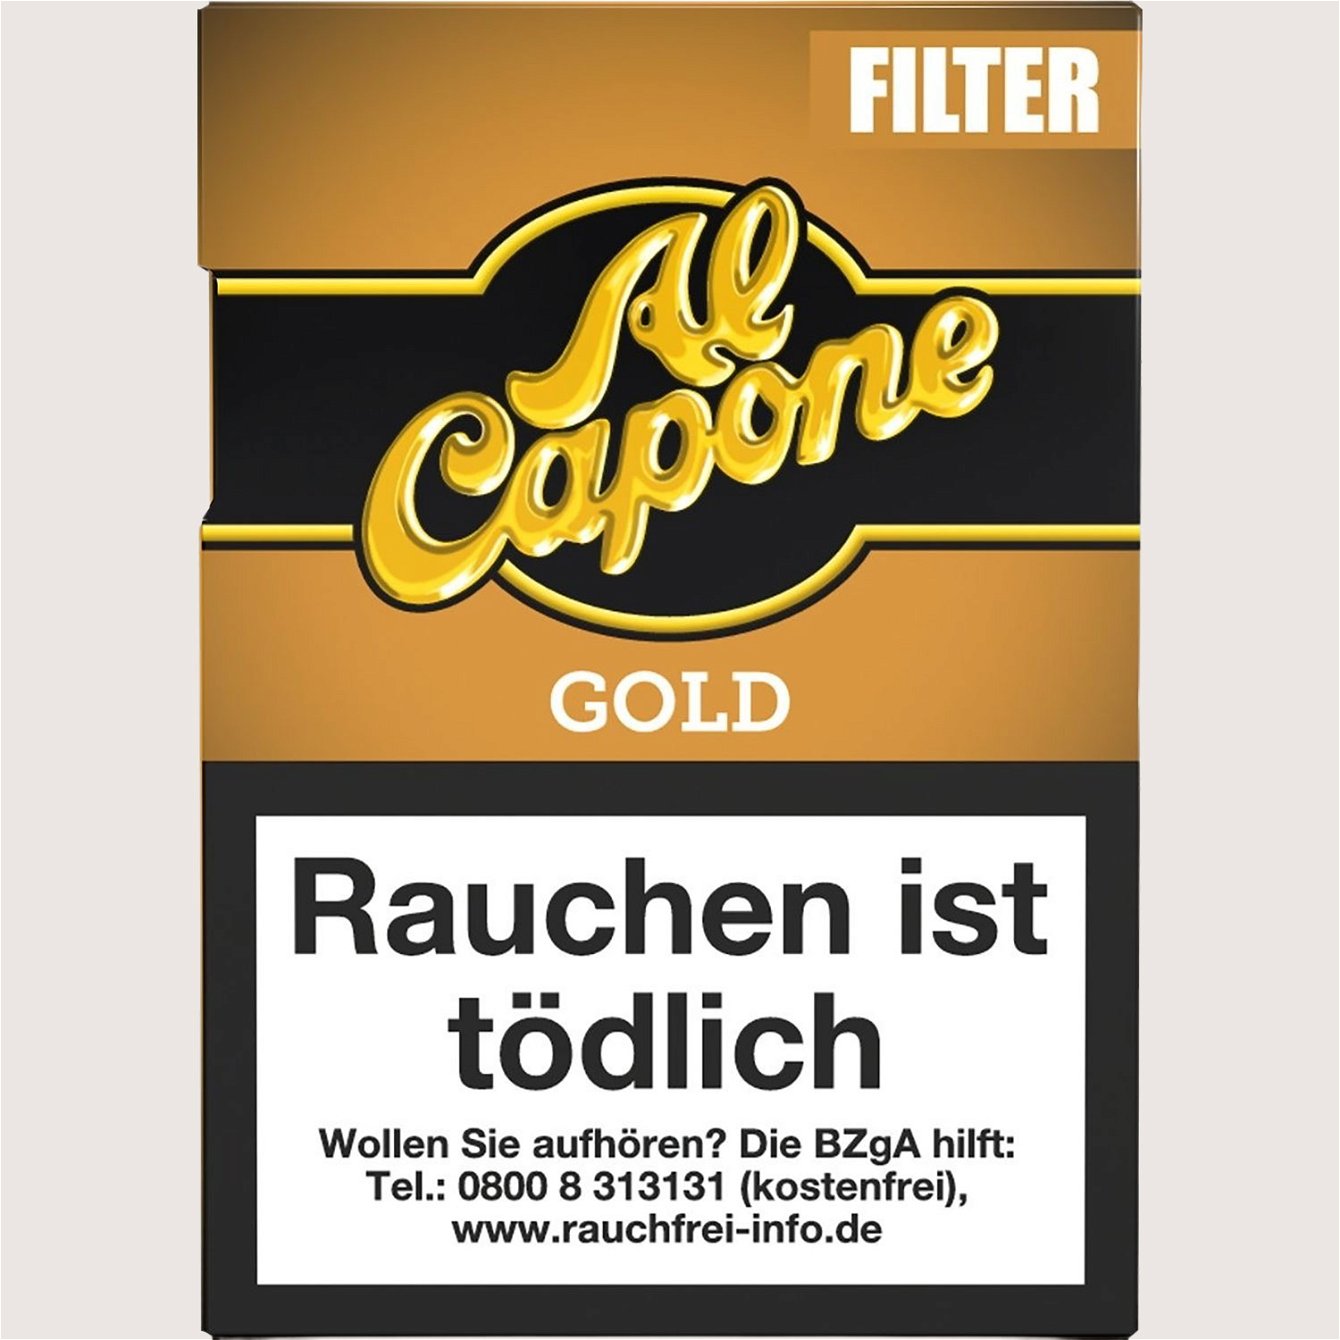 Al Capone Pockets Gold Filter